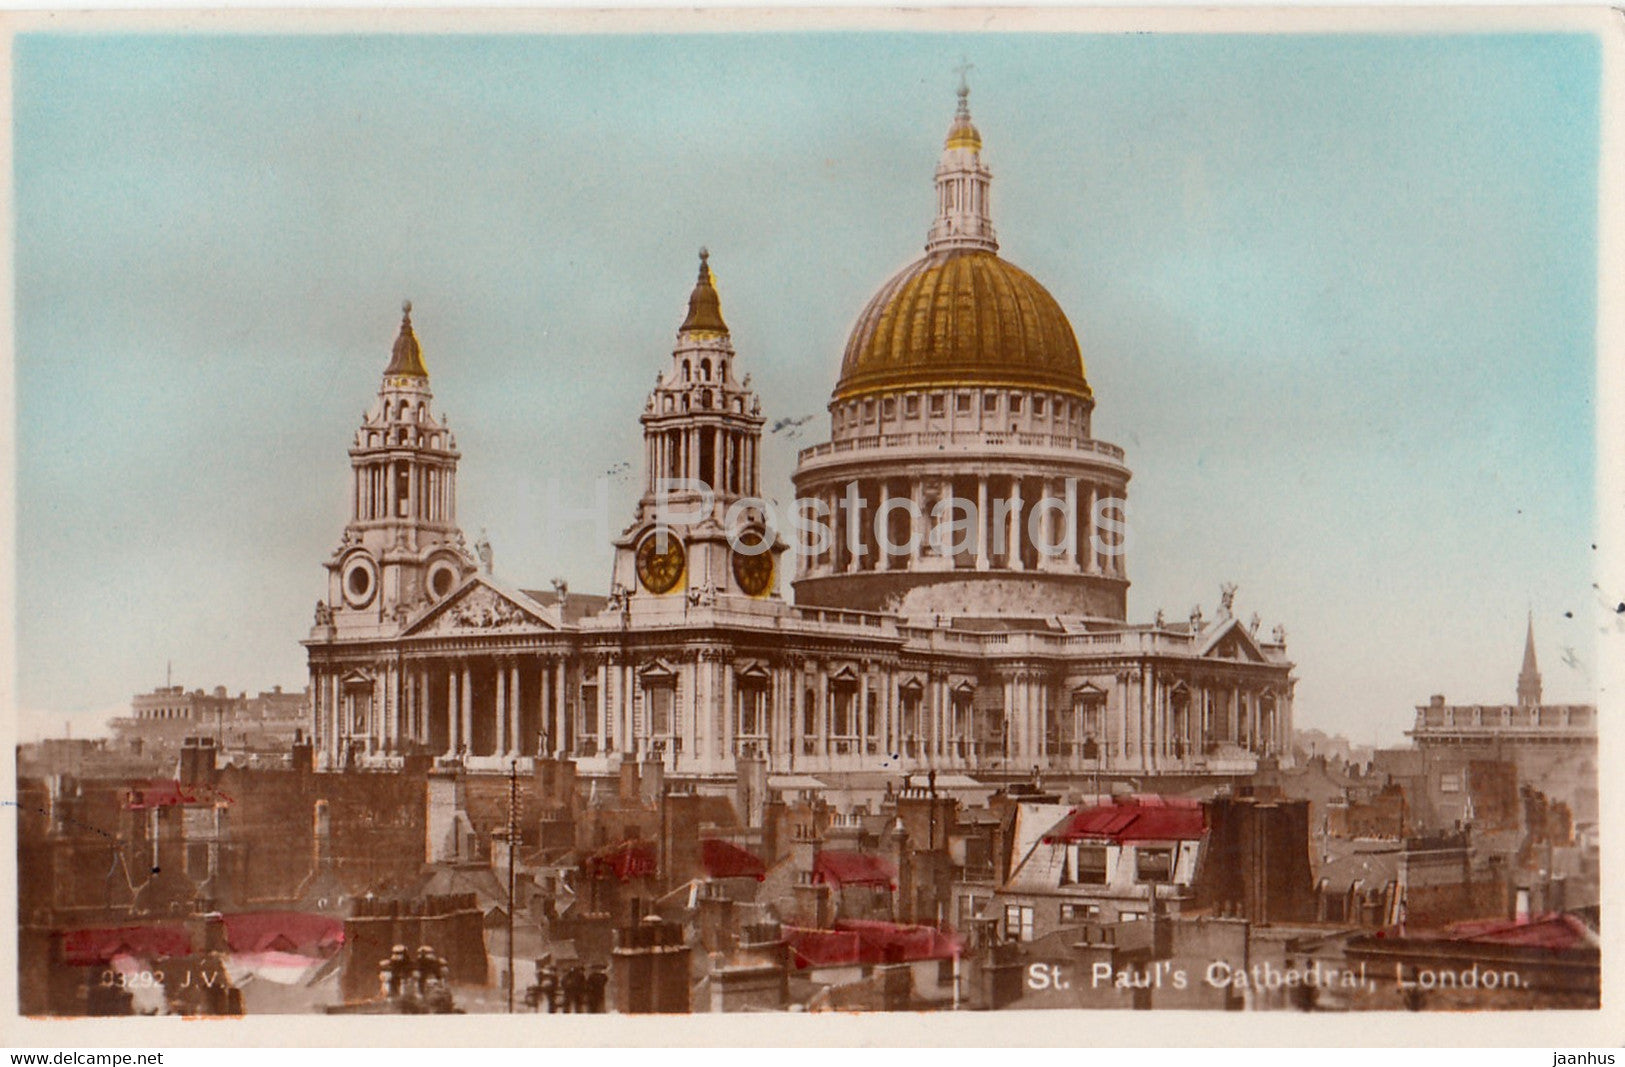 London - St Paul's Cathedral - Valentine - old postcard - 1931 - England - United Kingdom - used - JH Postcards